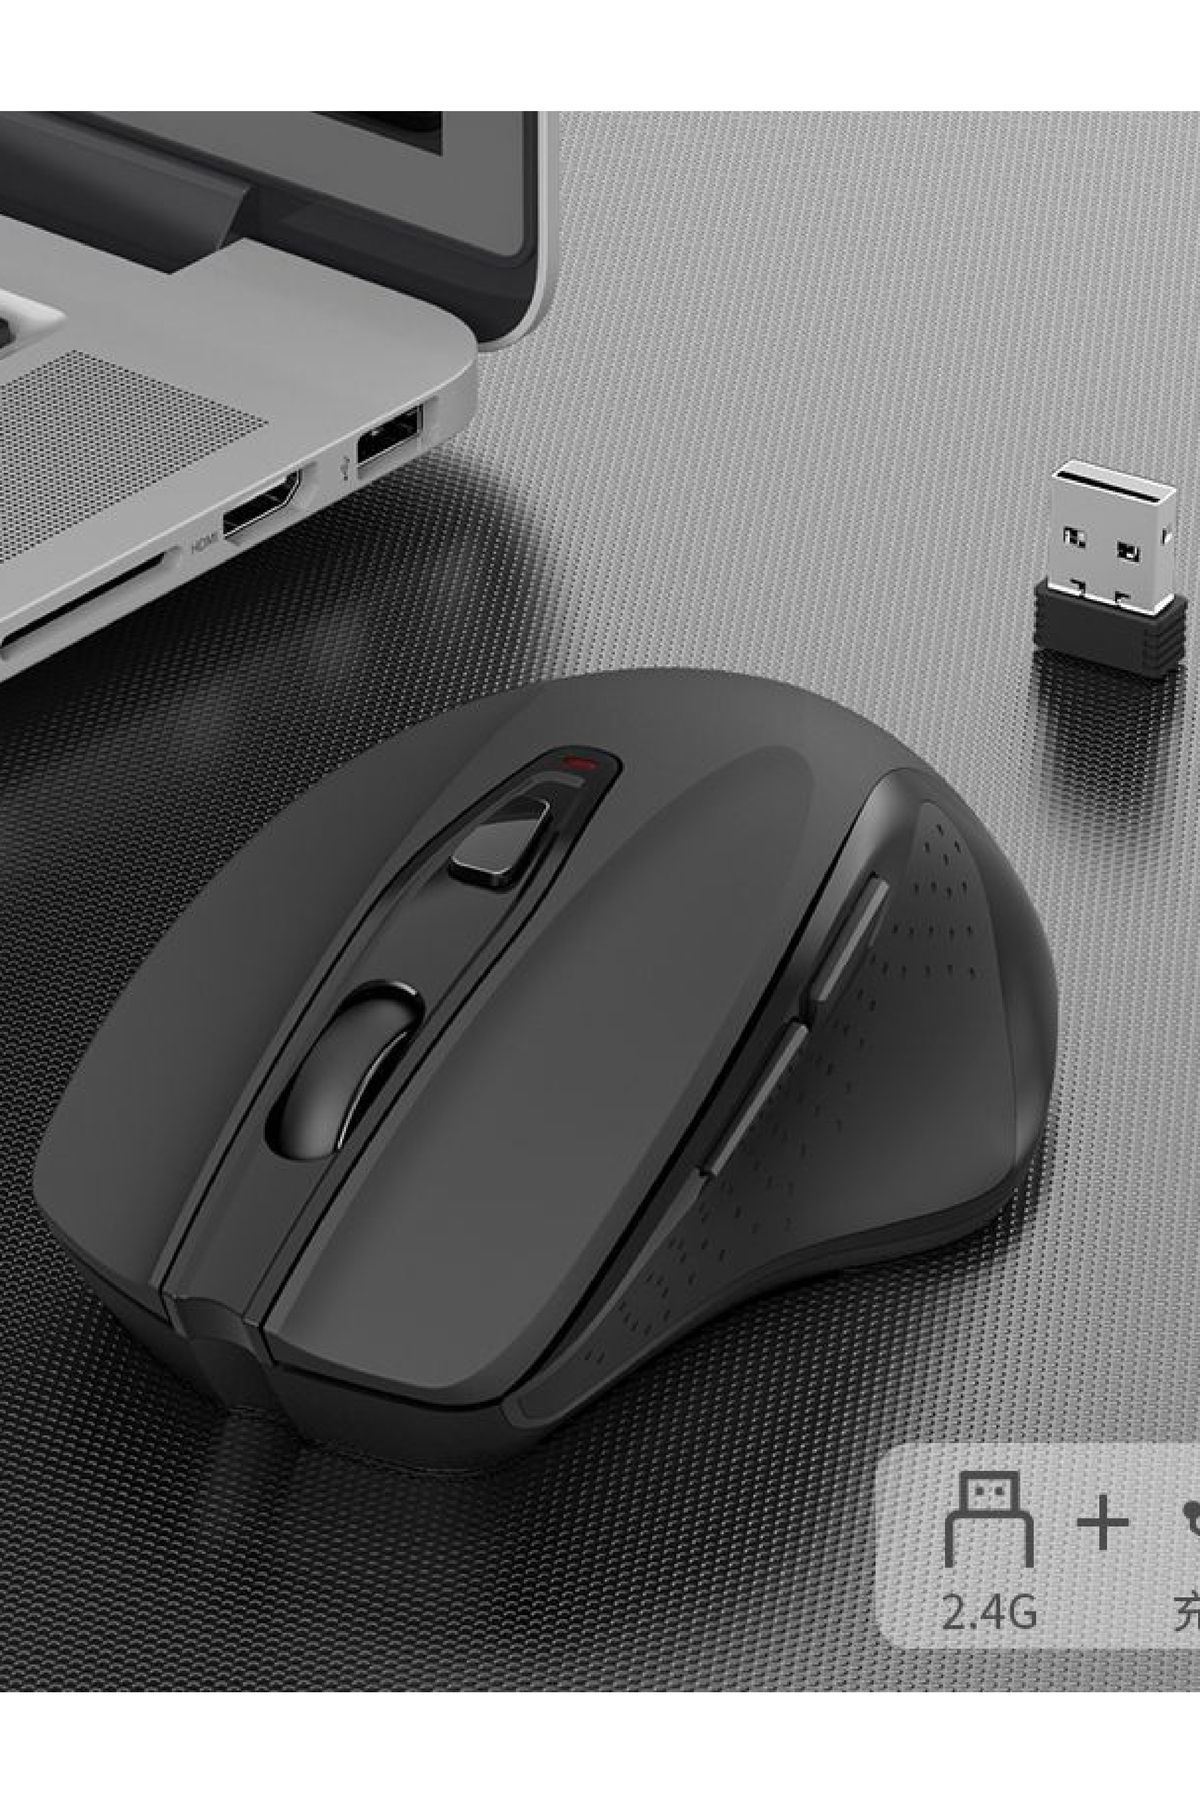 Japanex 2.4 Ghz Wiraless Mouse Kablosuz Mause Fare Usb High Sensitiviy 10 Metre Çekim Mesafesi Özel Tasarım